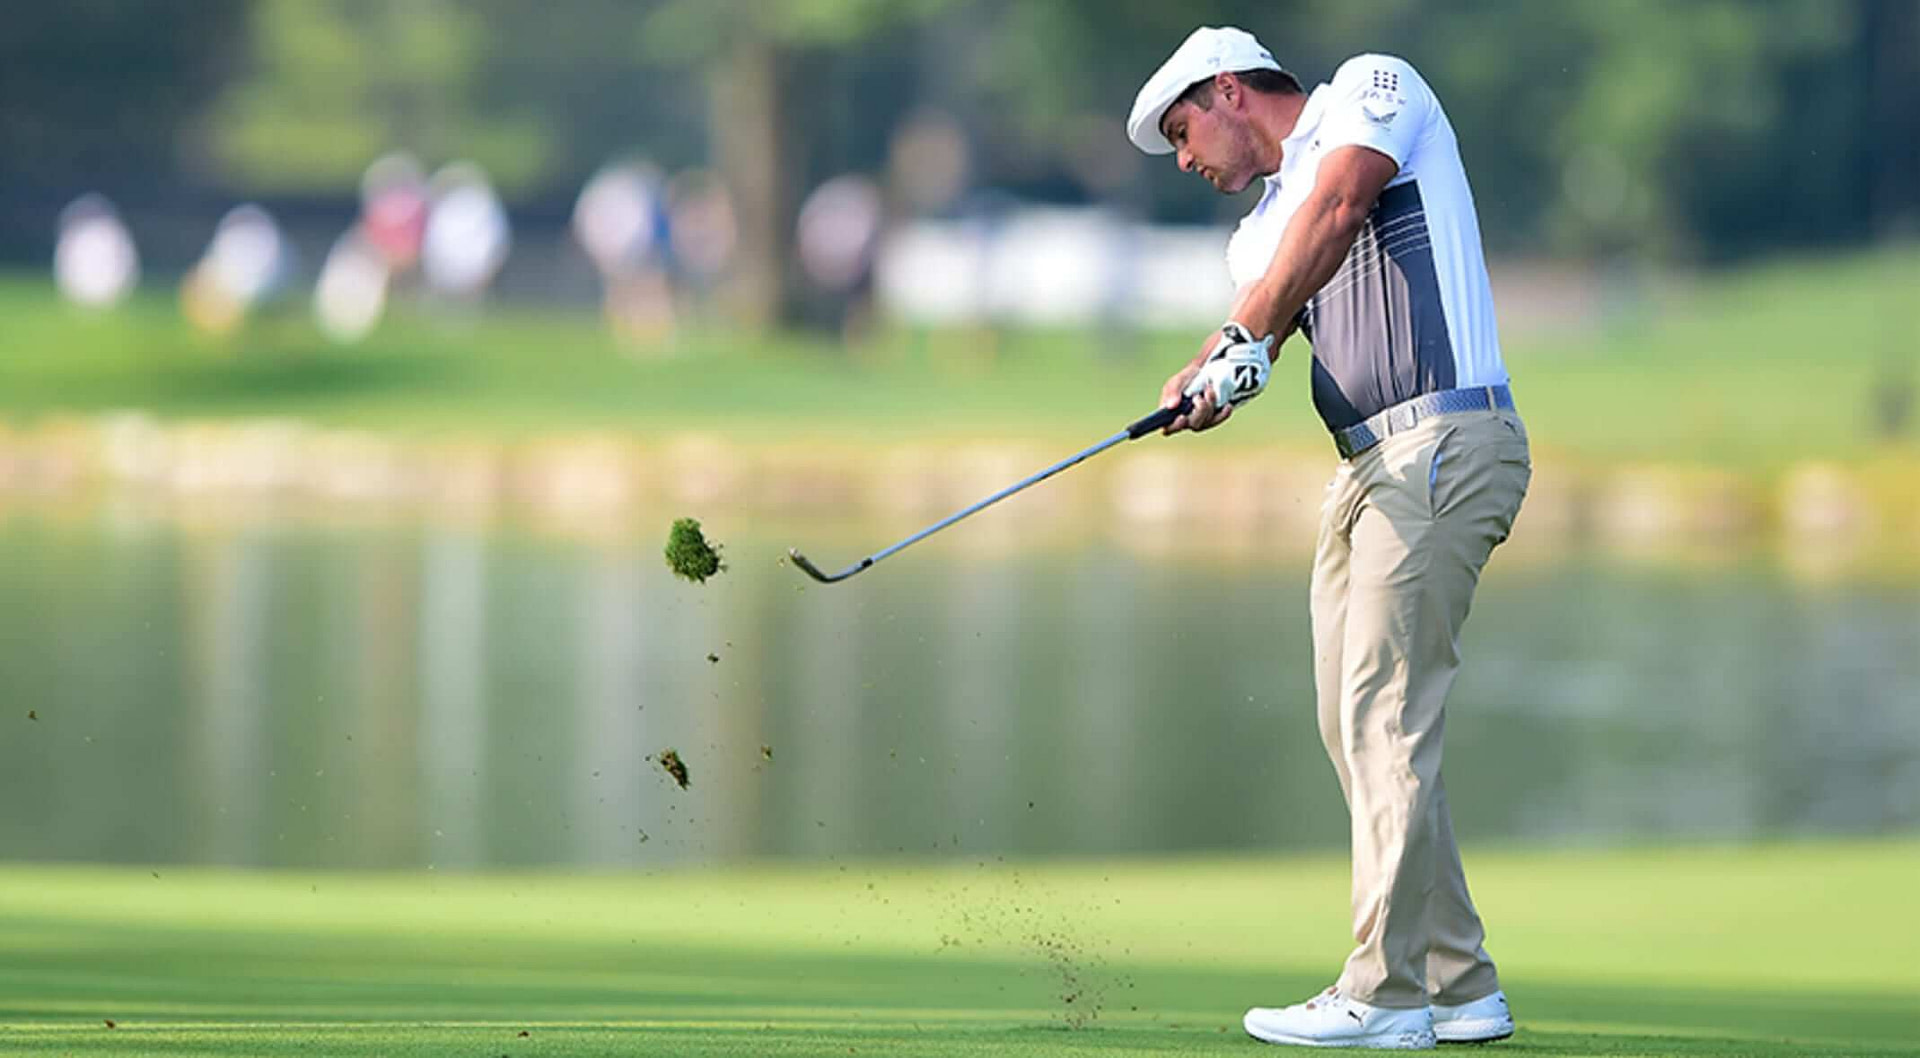 Photo: las vegas golf betting rules